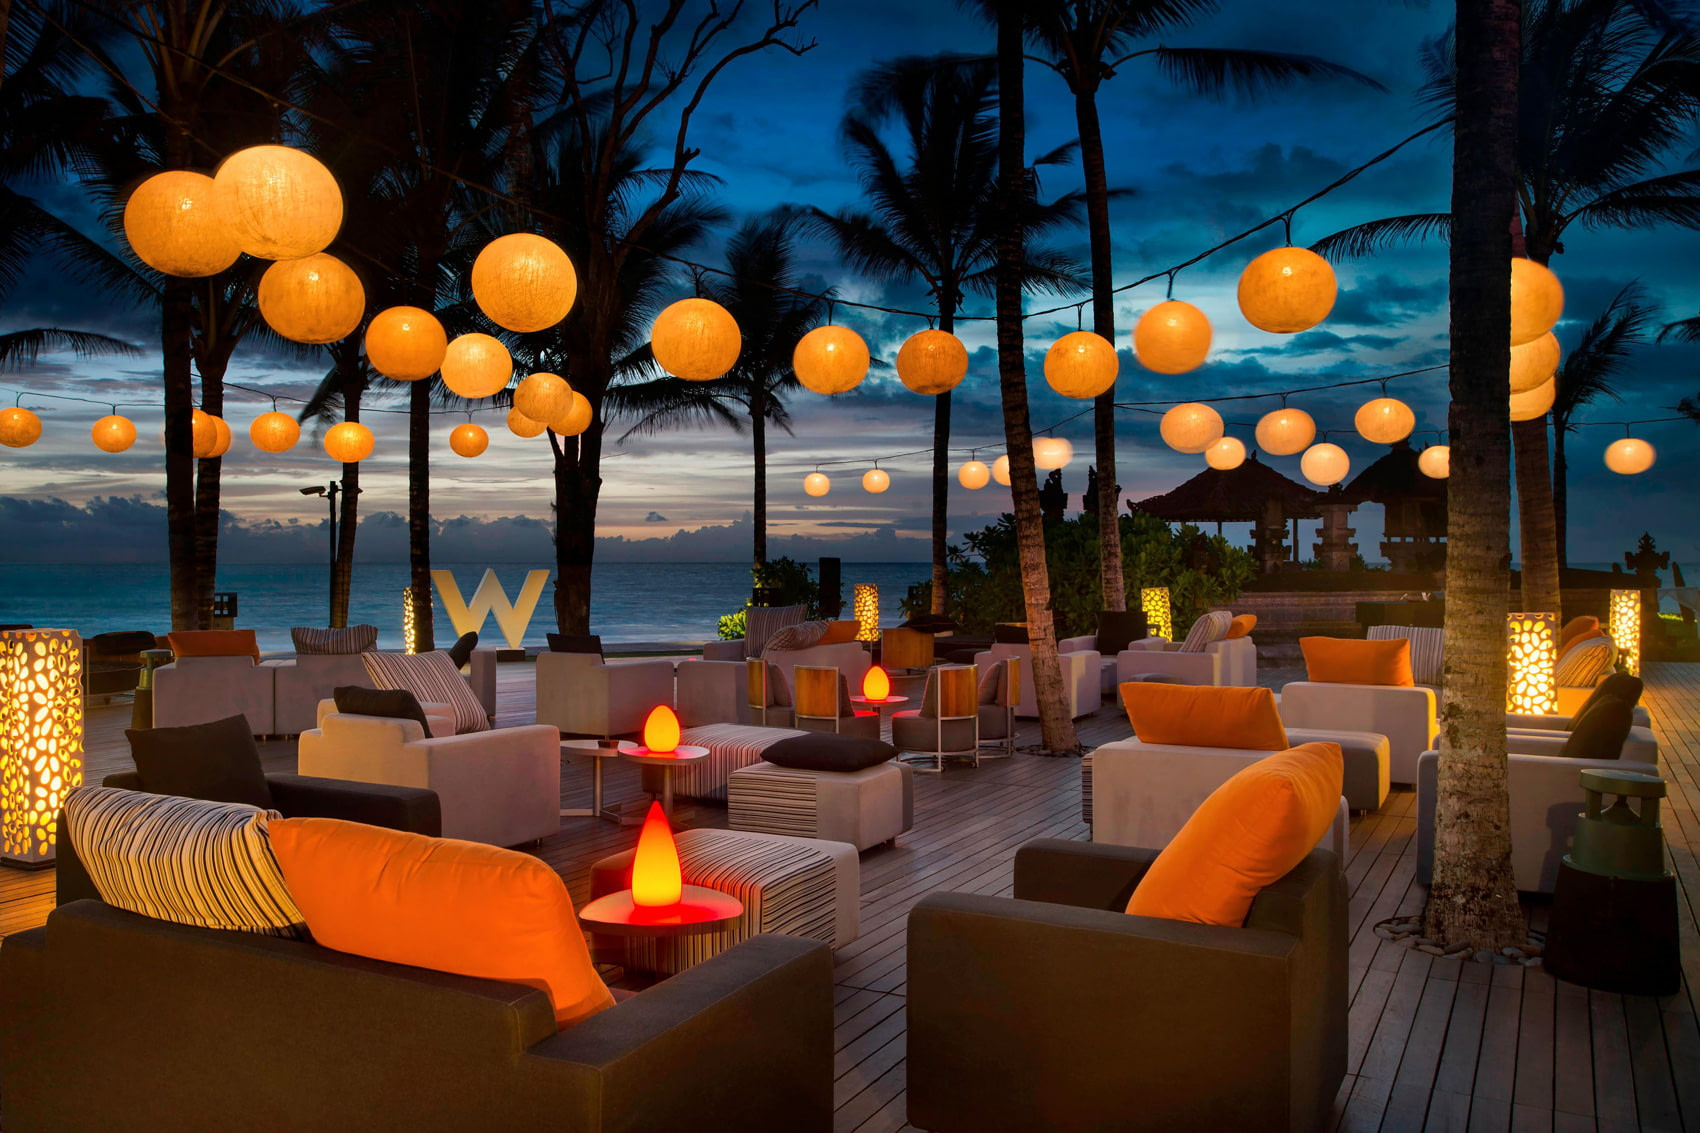 Beachfron hotel in Bali